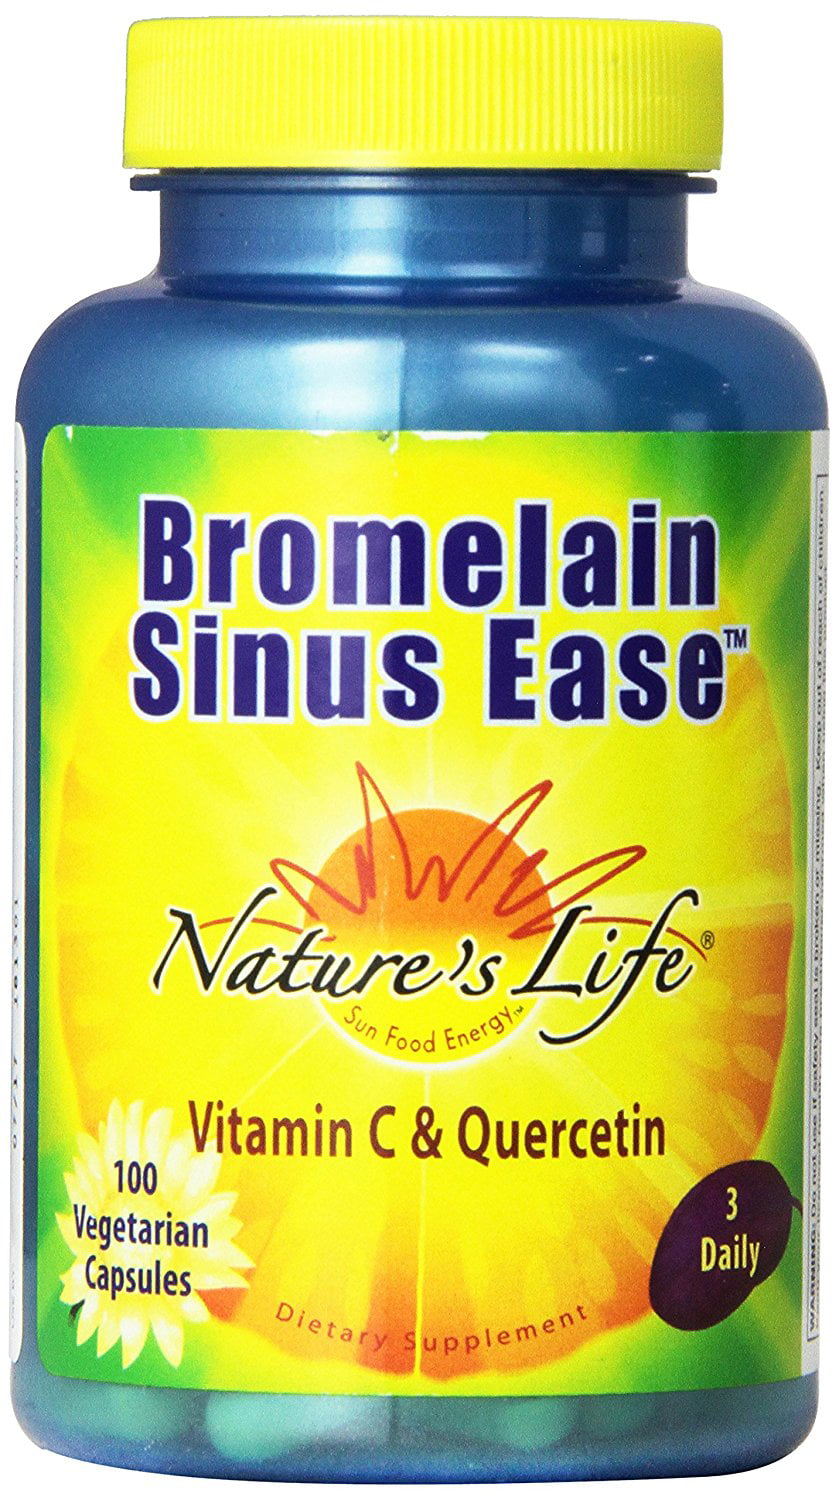 Nature's Life Bromelain Sinus Ease 1200mg | With Vitamin C ...